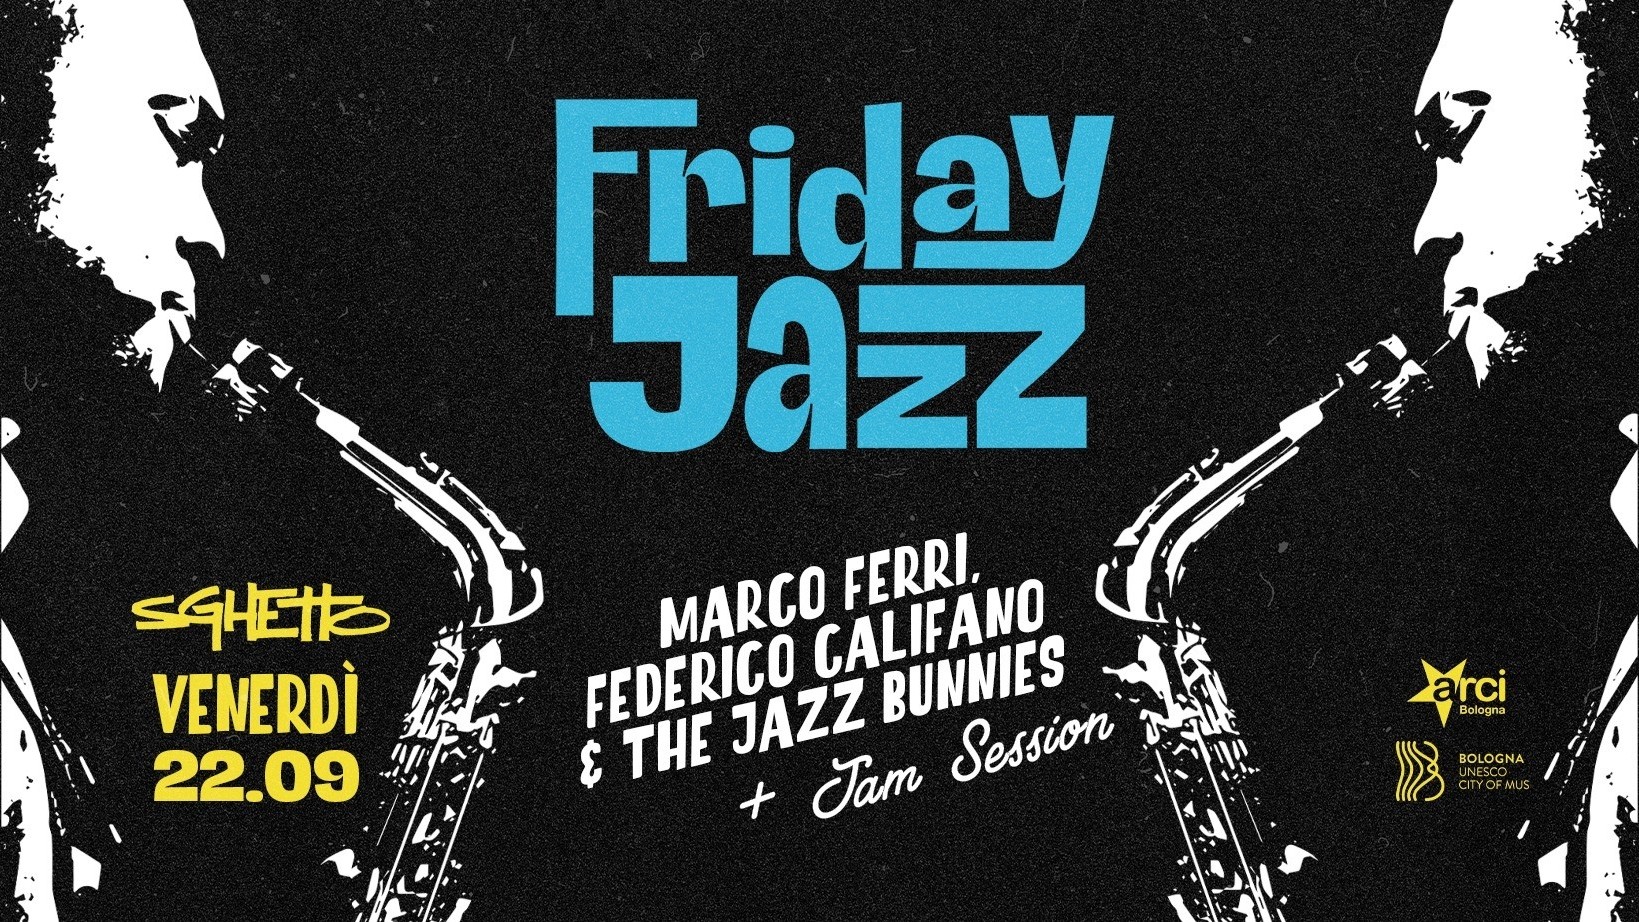 Friday Jazz - Maco Ferri, Federico Califano & The Jazz Bunnies